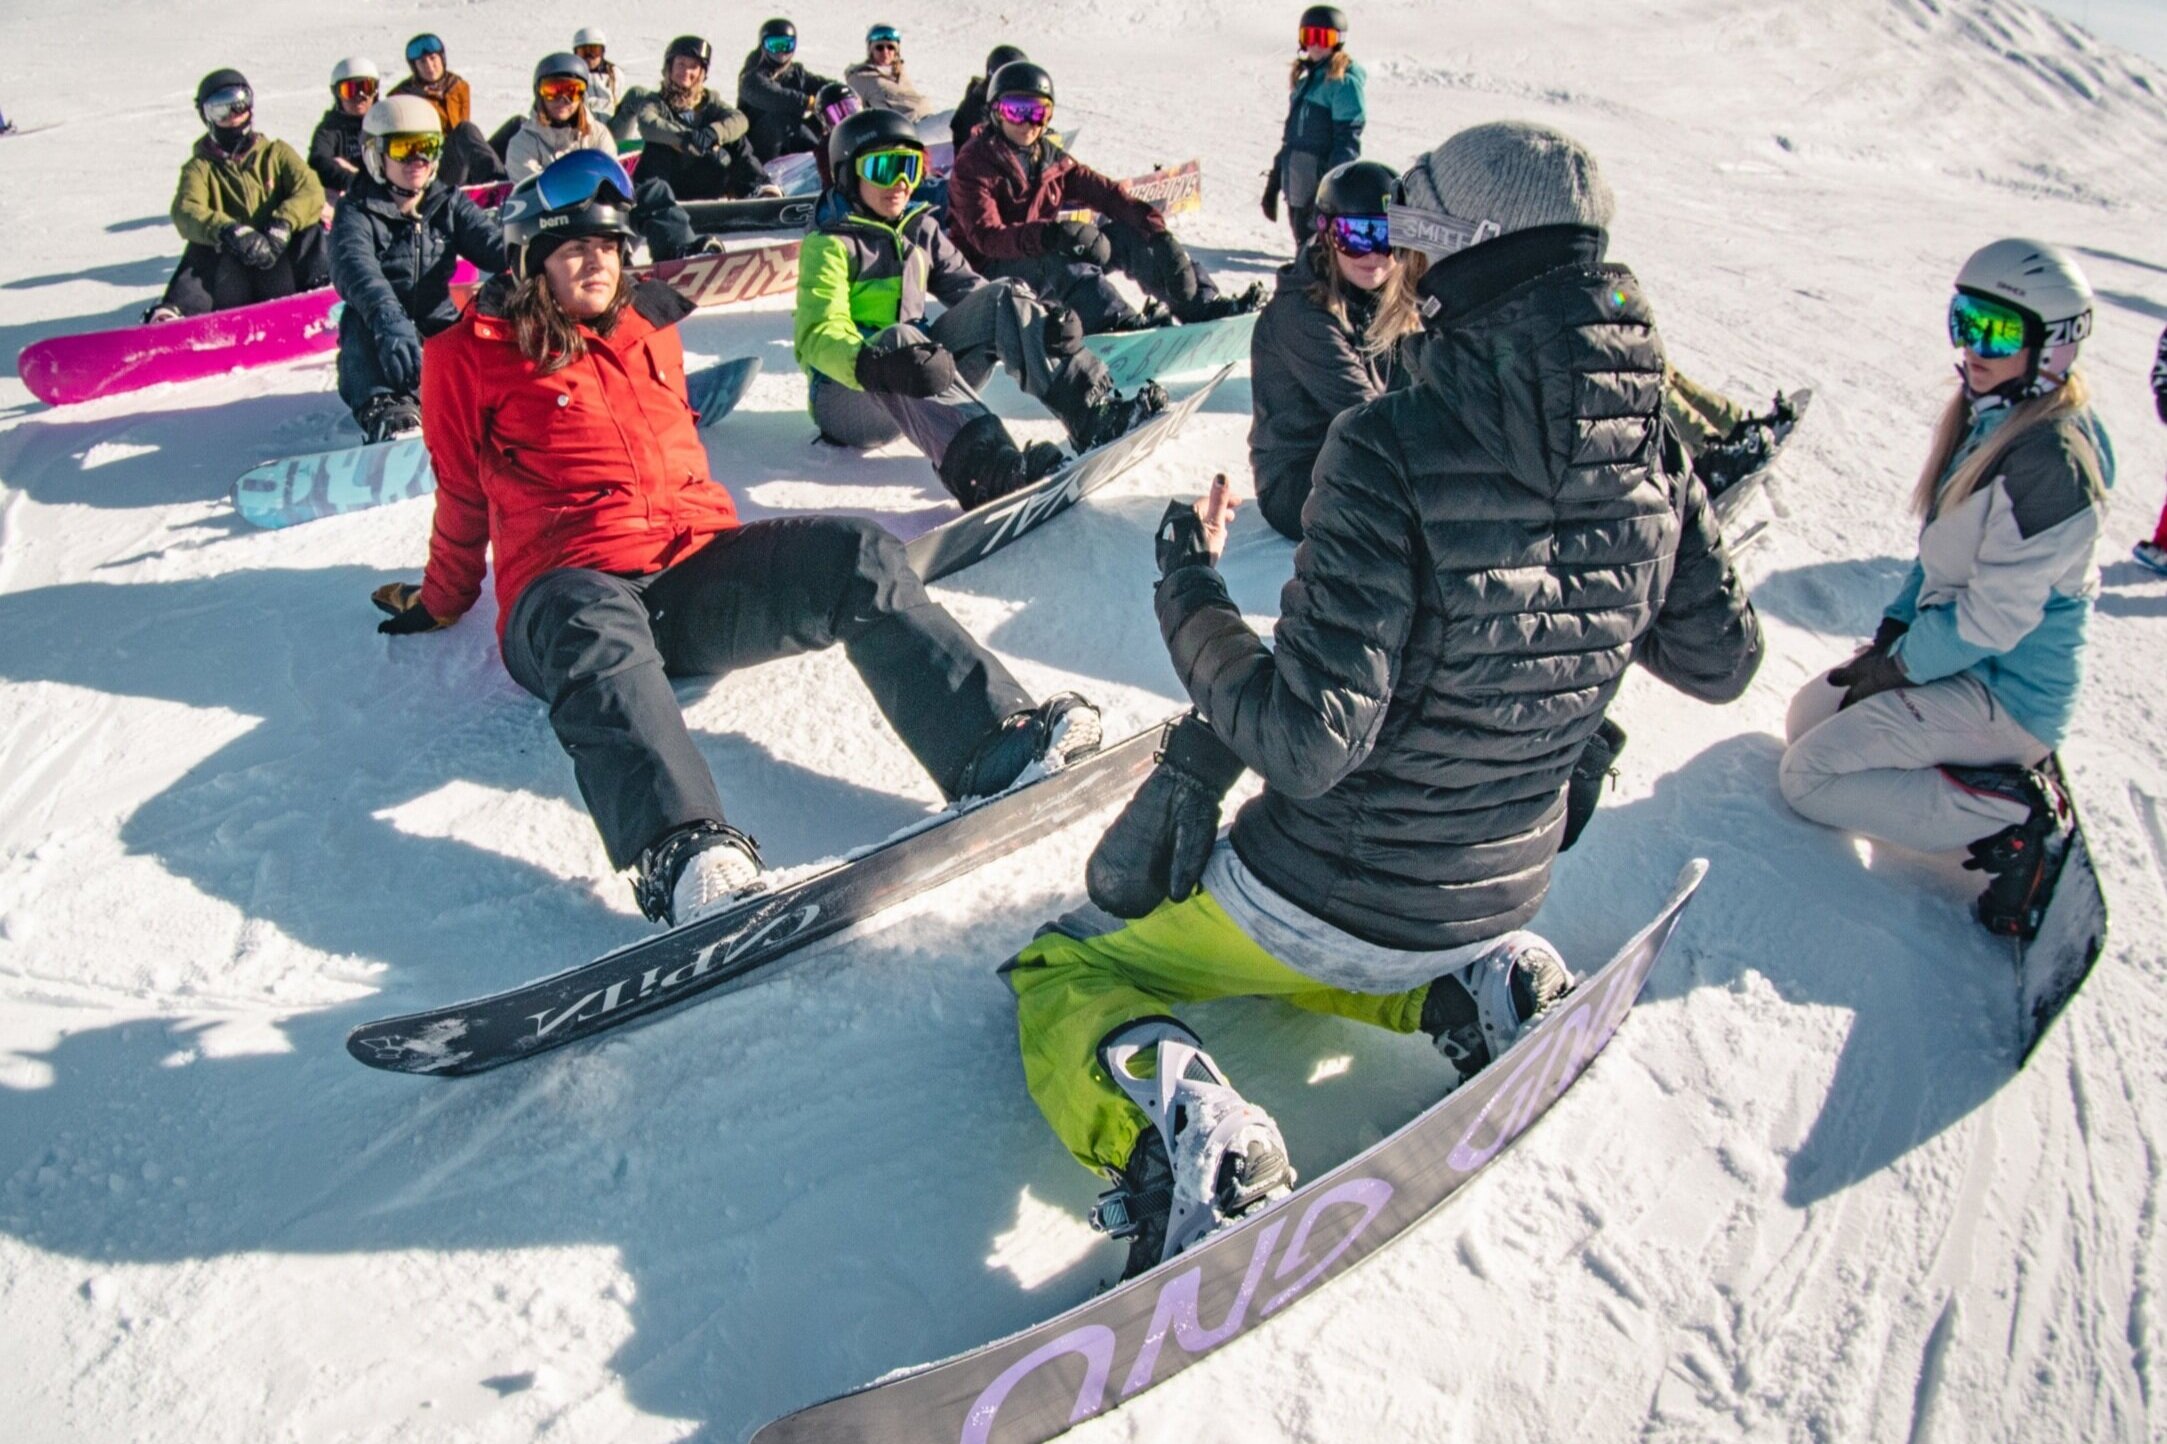 Snowboarding Snowboarding Equipment